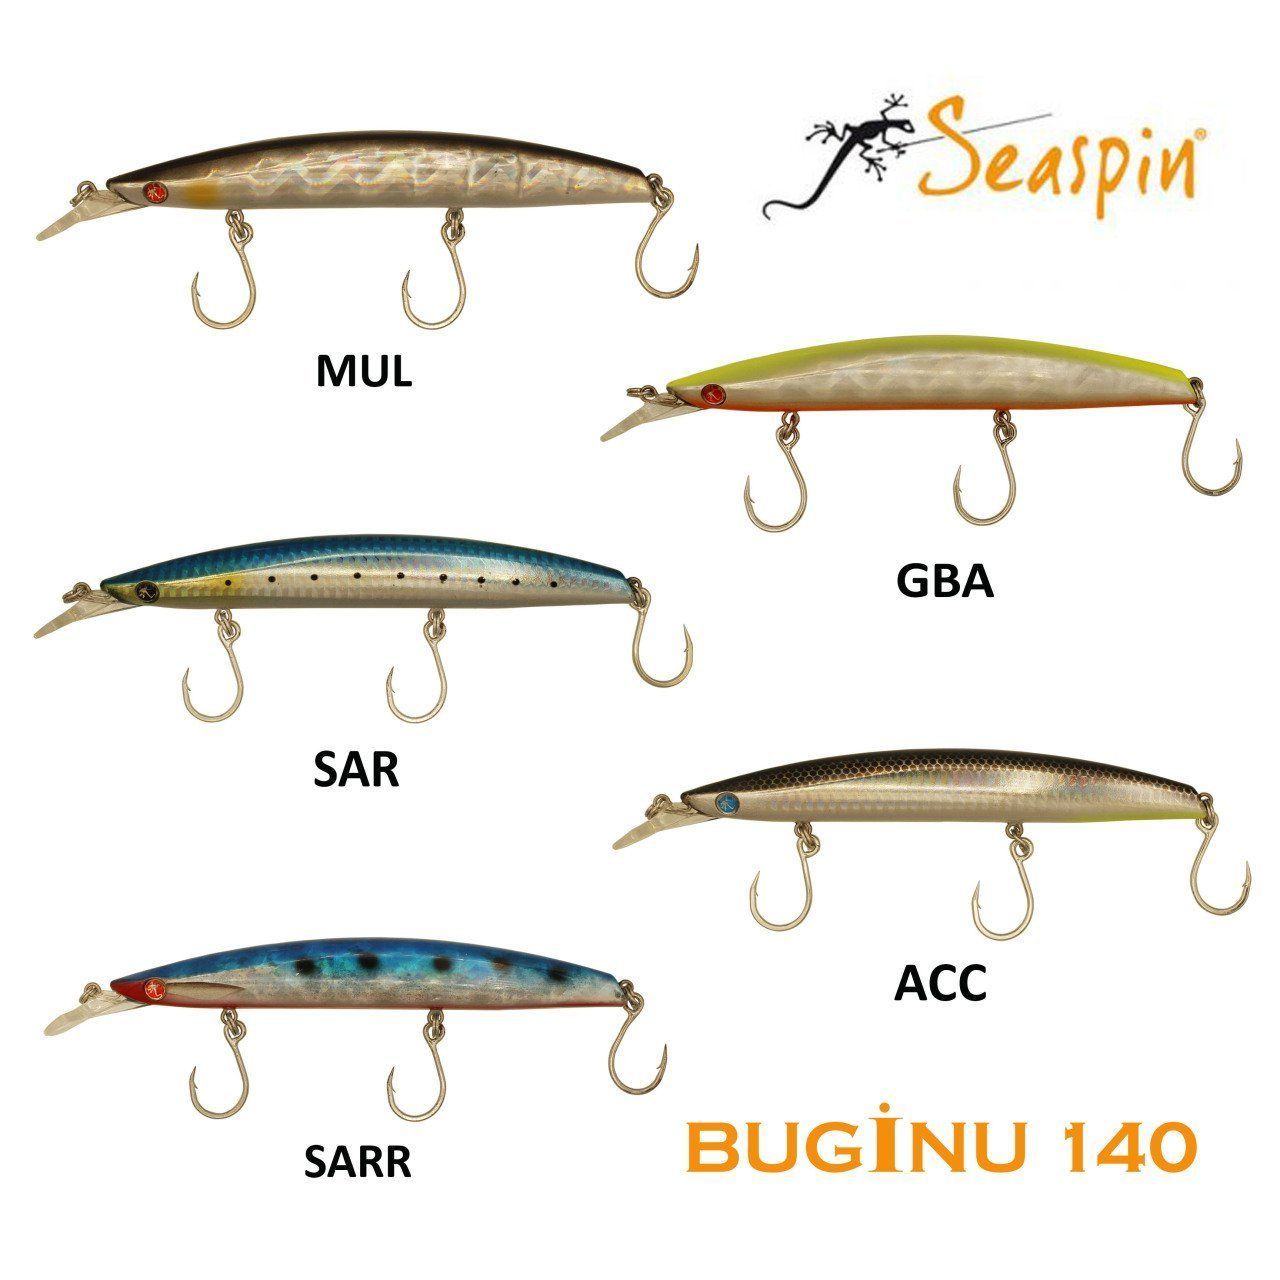 Seaspin Buginu 140mm 28 gr Maket Balık